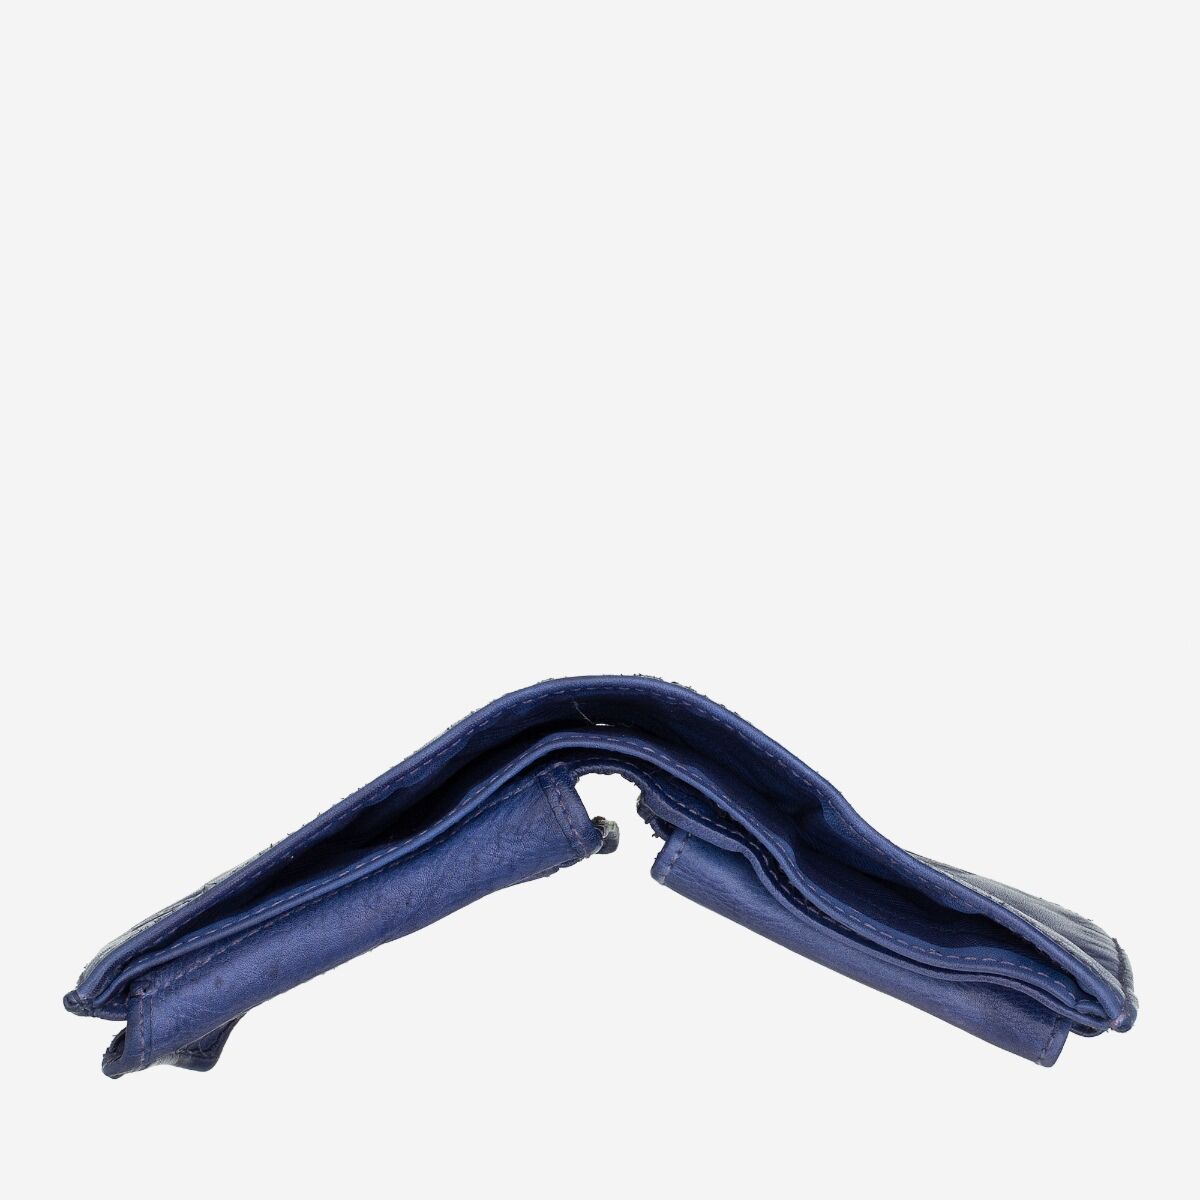 DuDu Mans hand-made soft natural high quality leather wallet - Indigo Blue